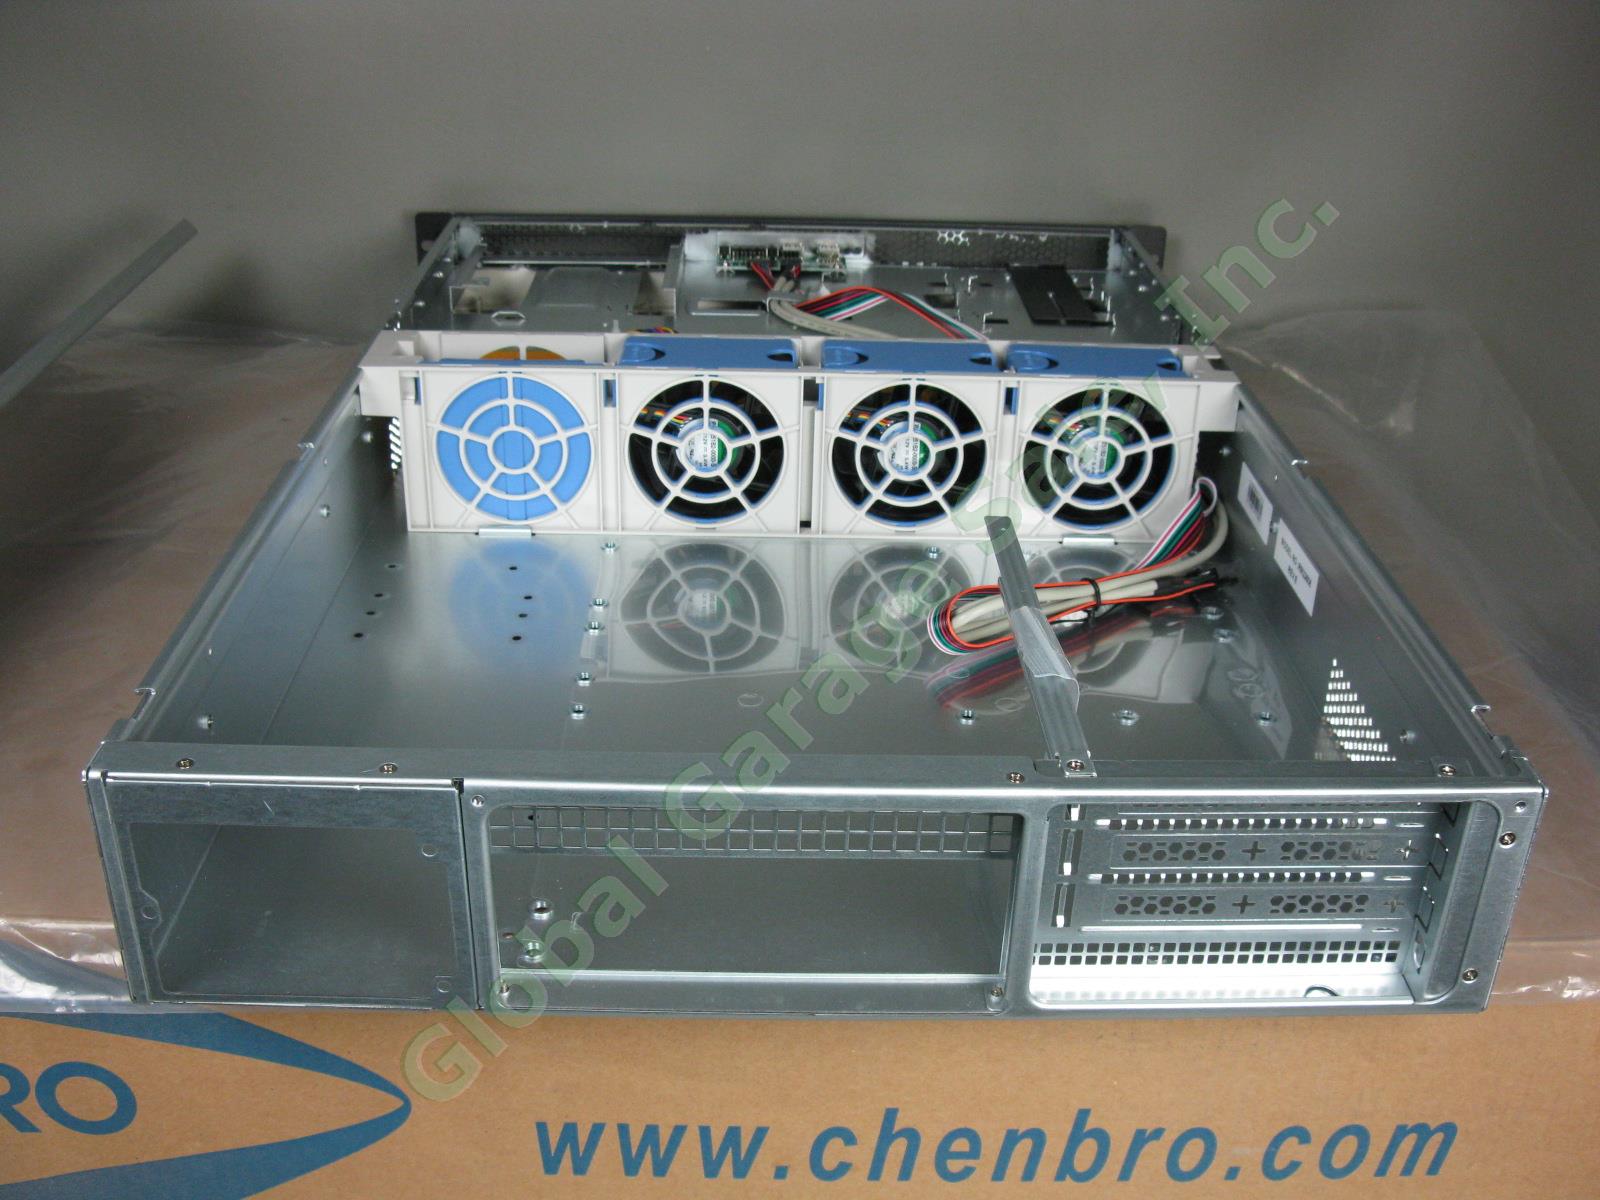 NEW Chenbro RM23608 2U 8-Bay Hot Swap Rack Mount Server Case Chassis SSI EEB 7